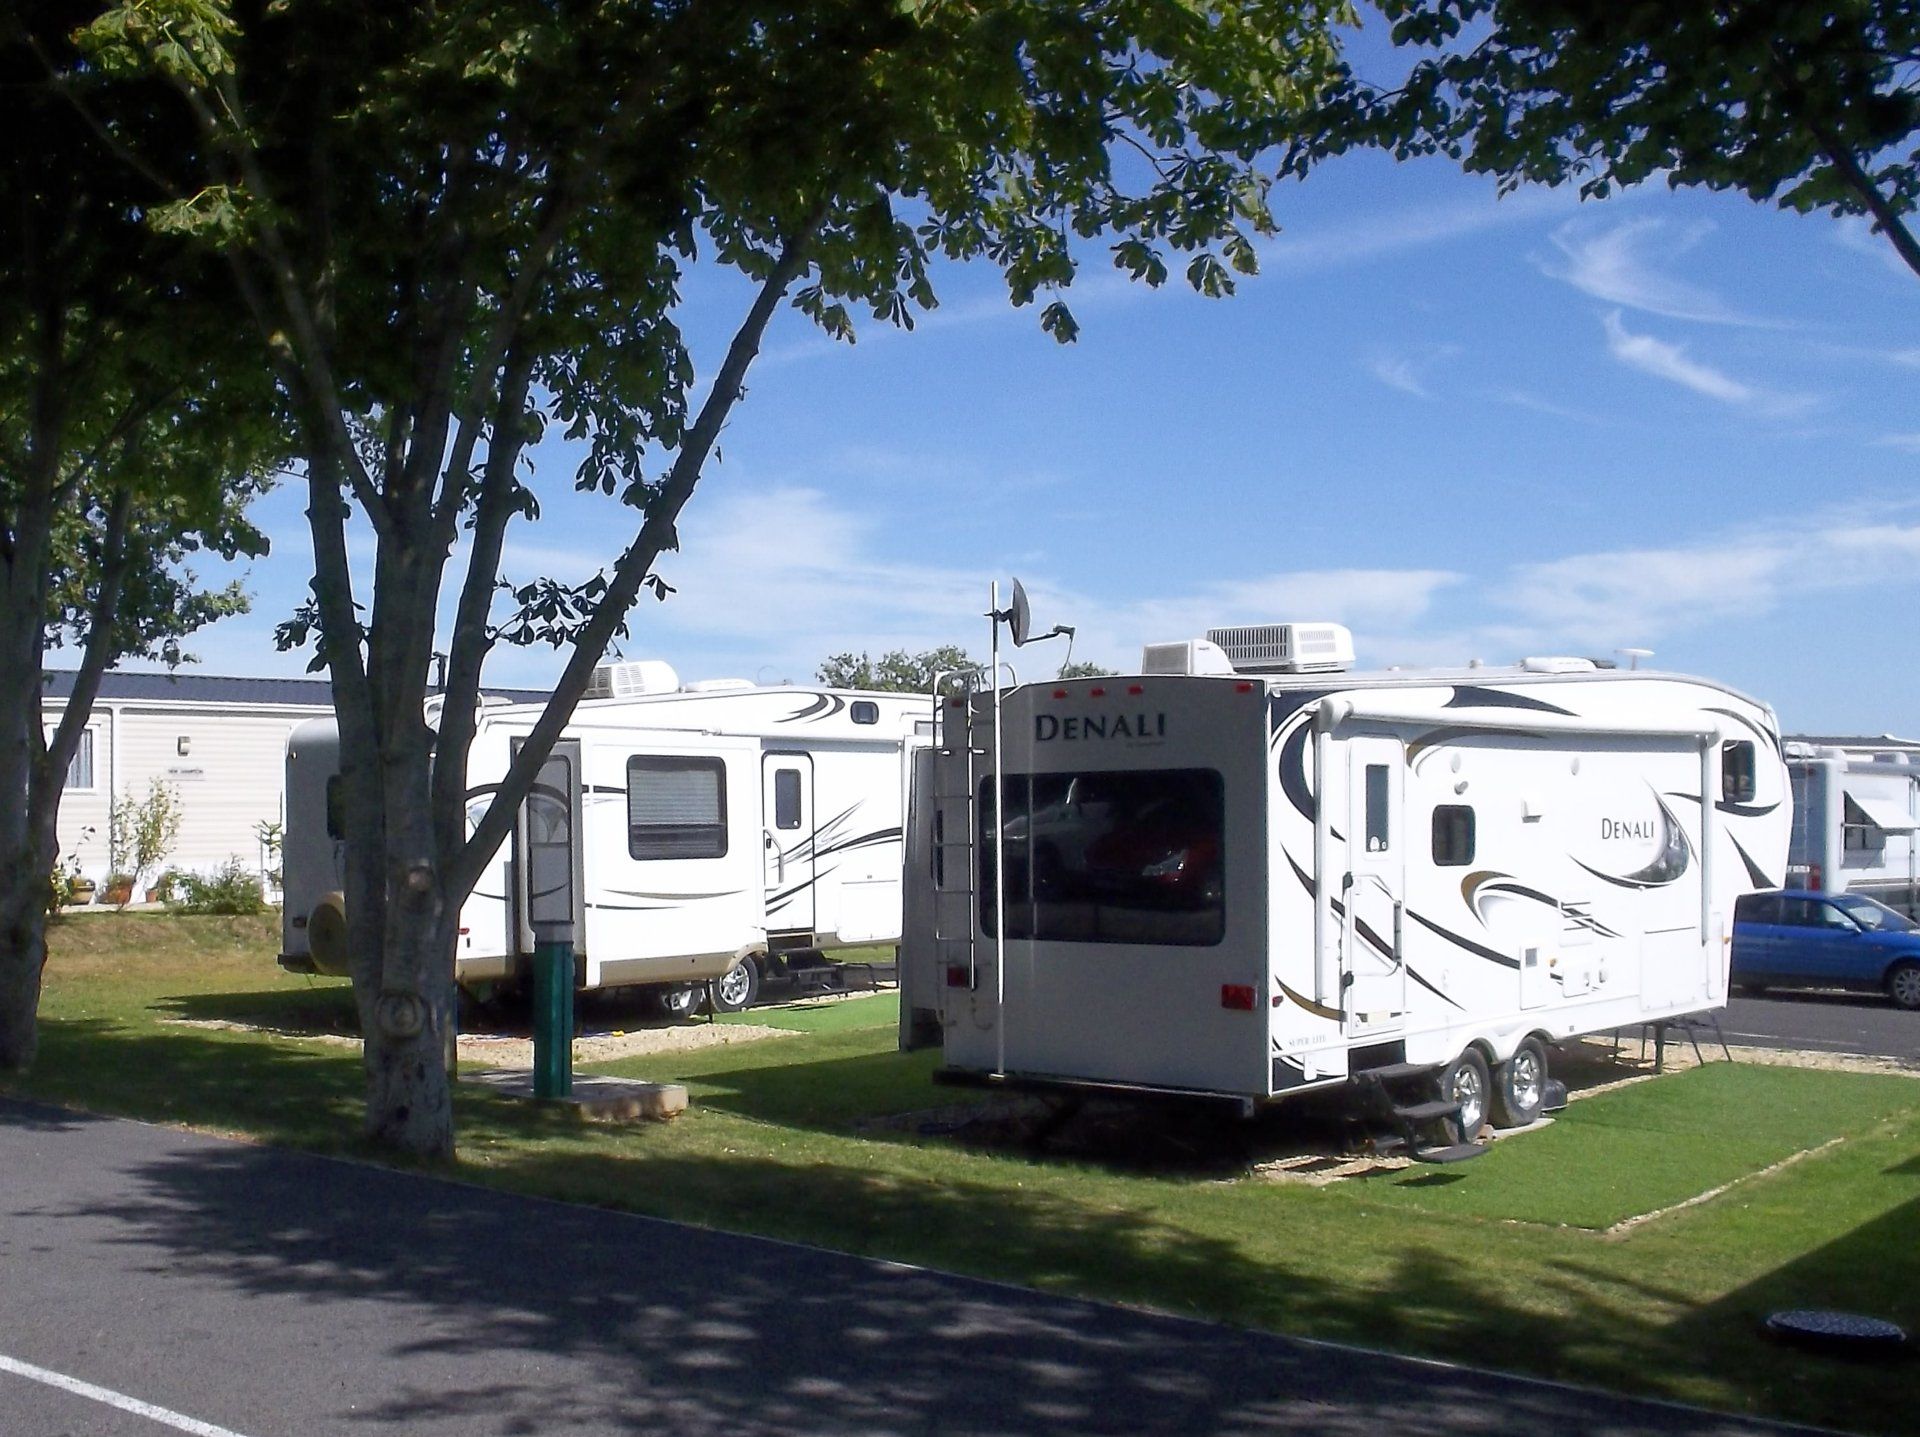 Touring caravans at Fairways caravan park near Burnham-on-Sea